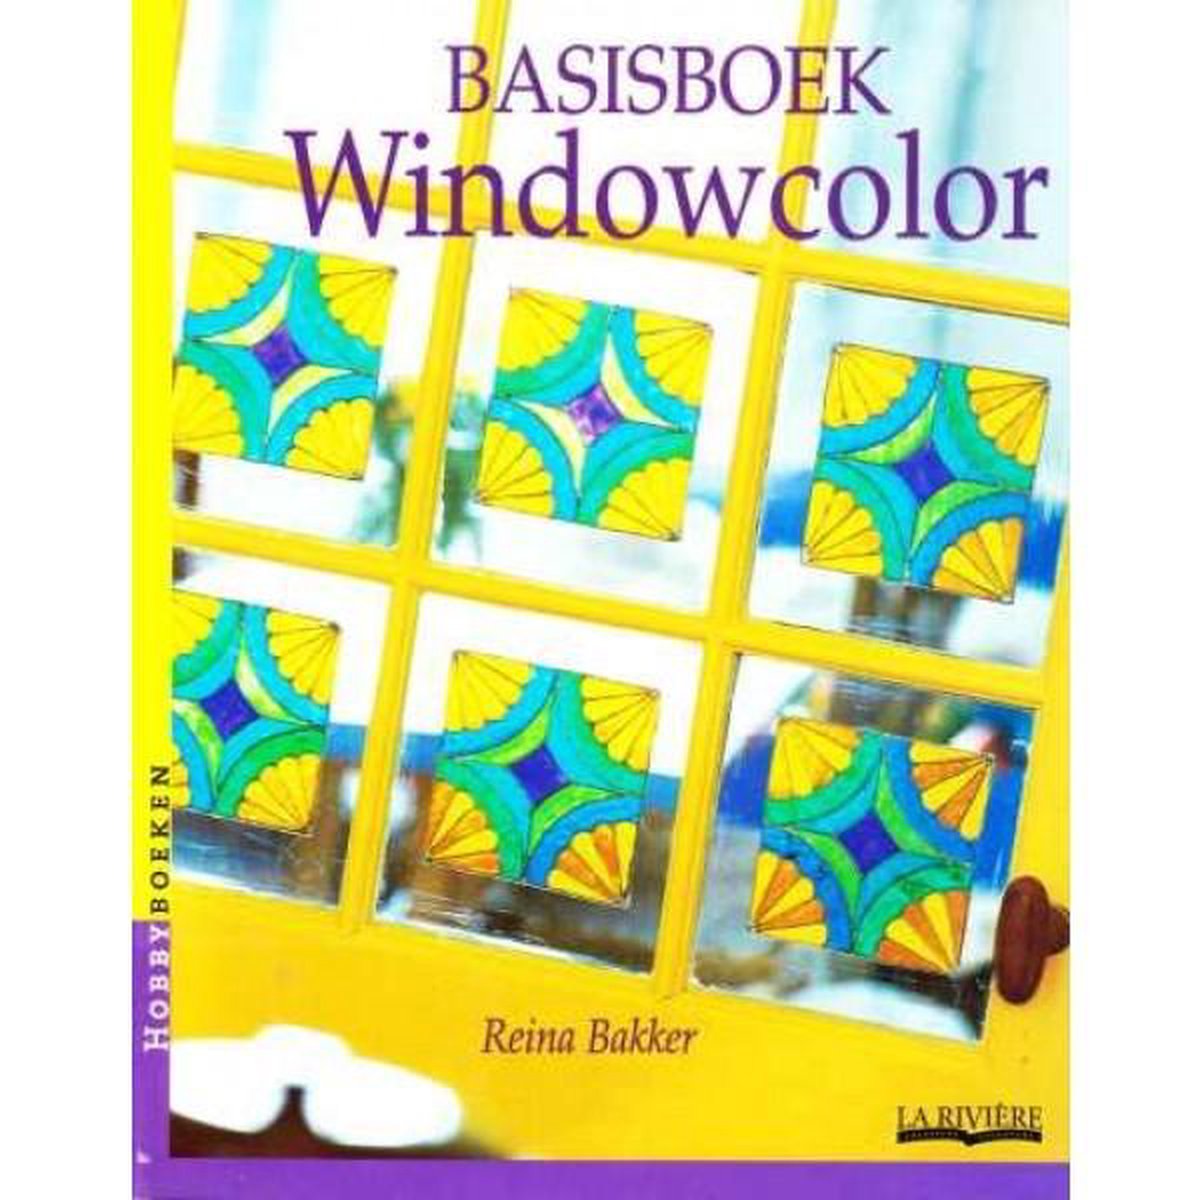 Basisboek Windowcolor / Hobbyboeken